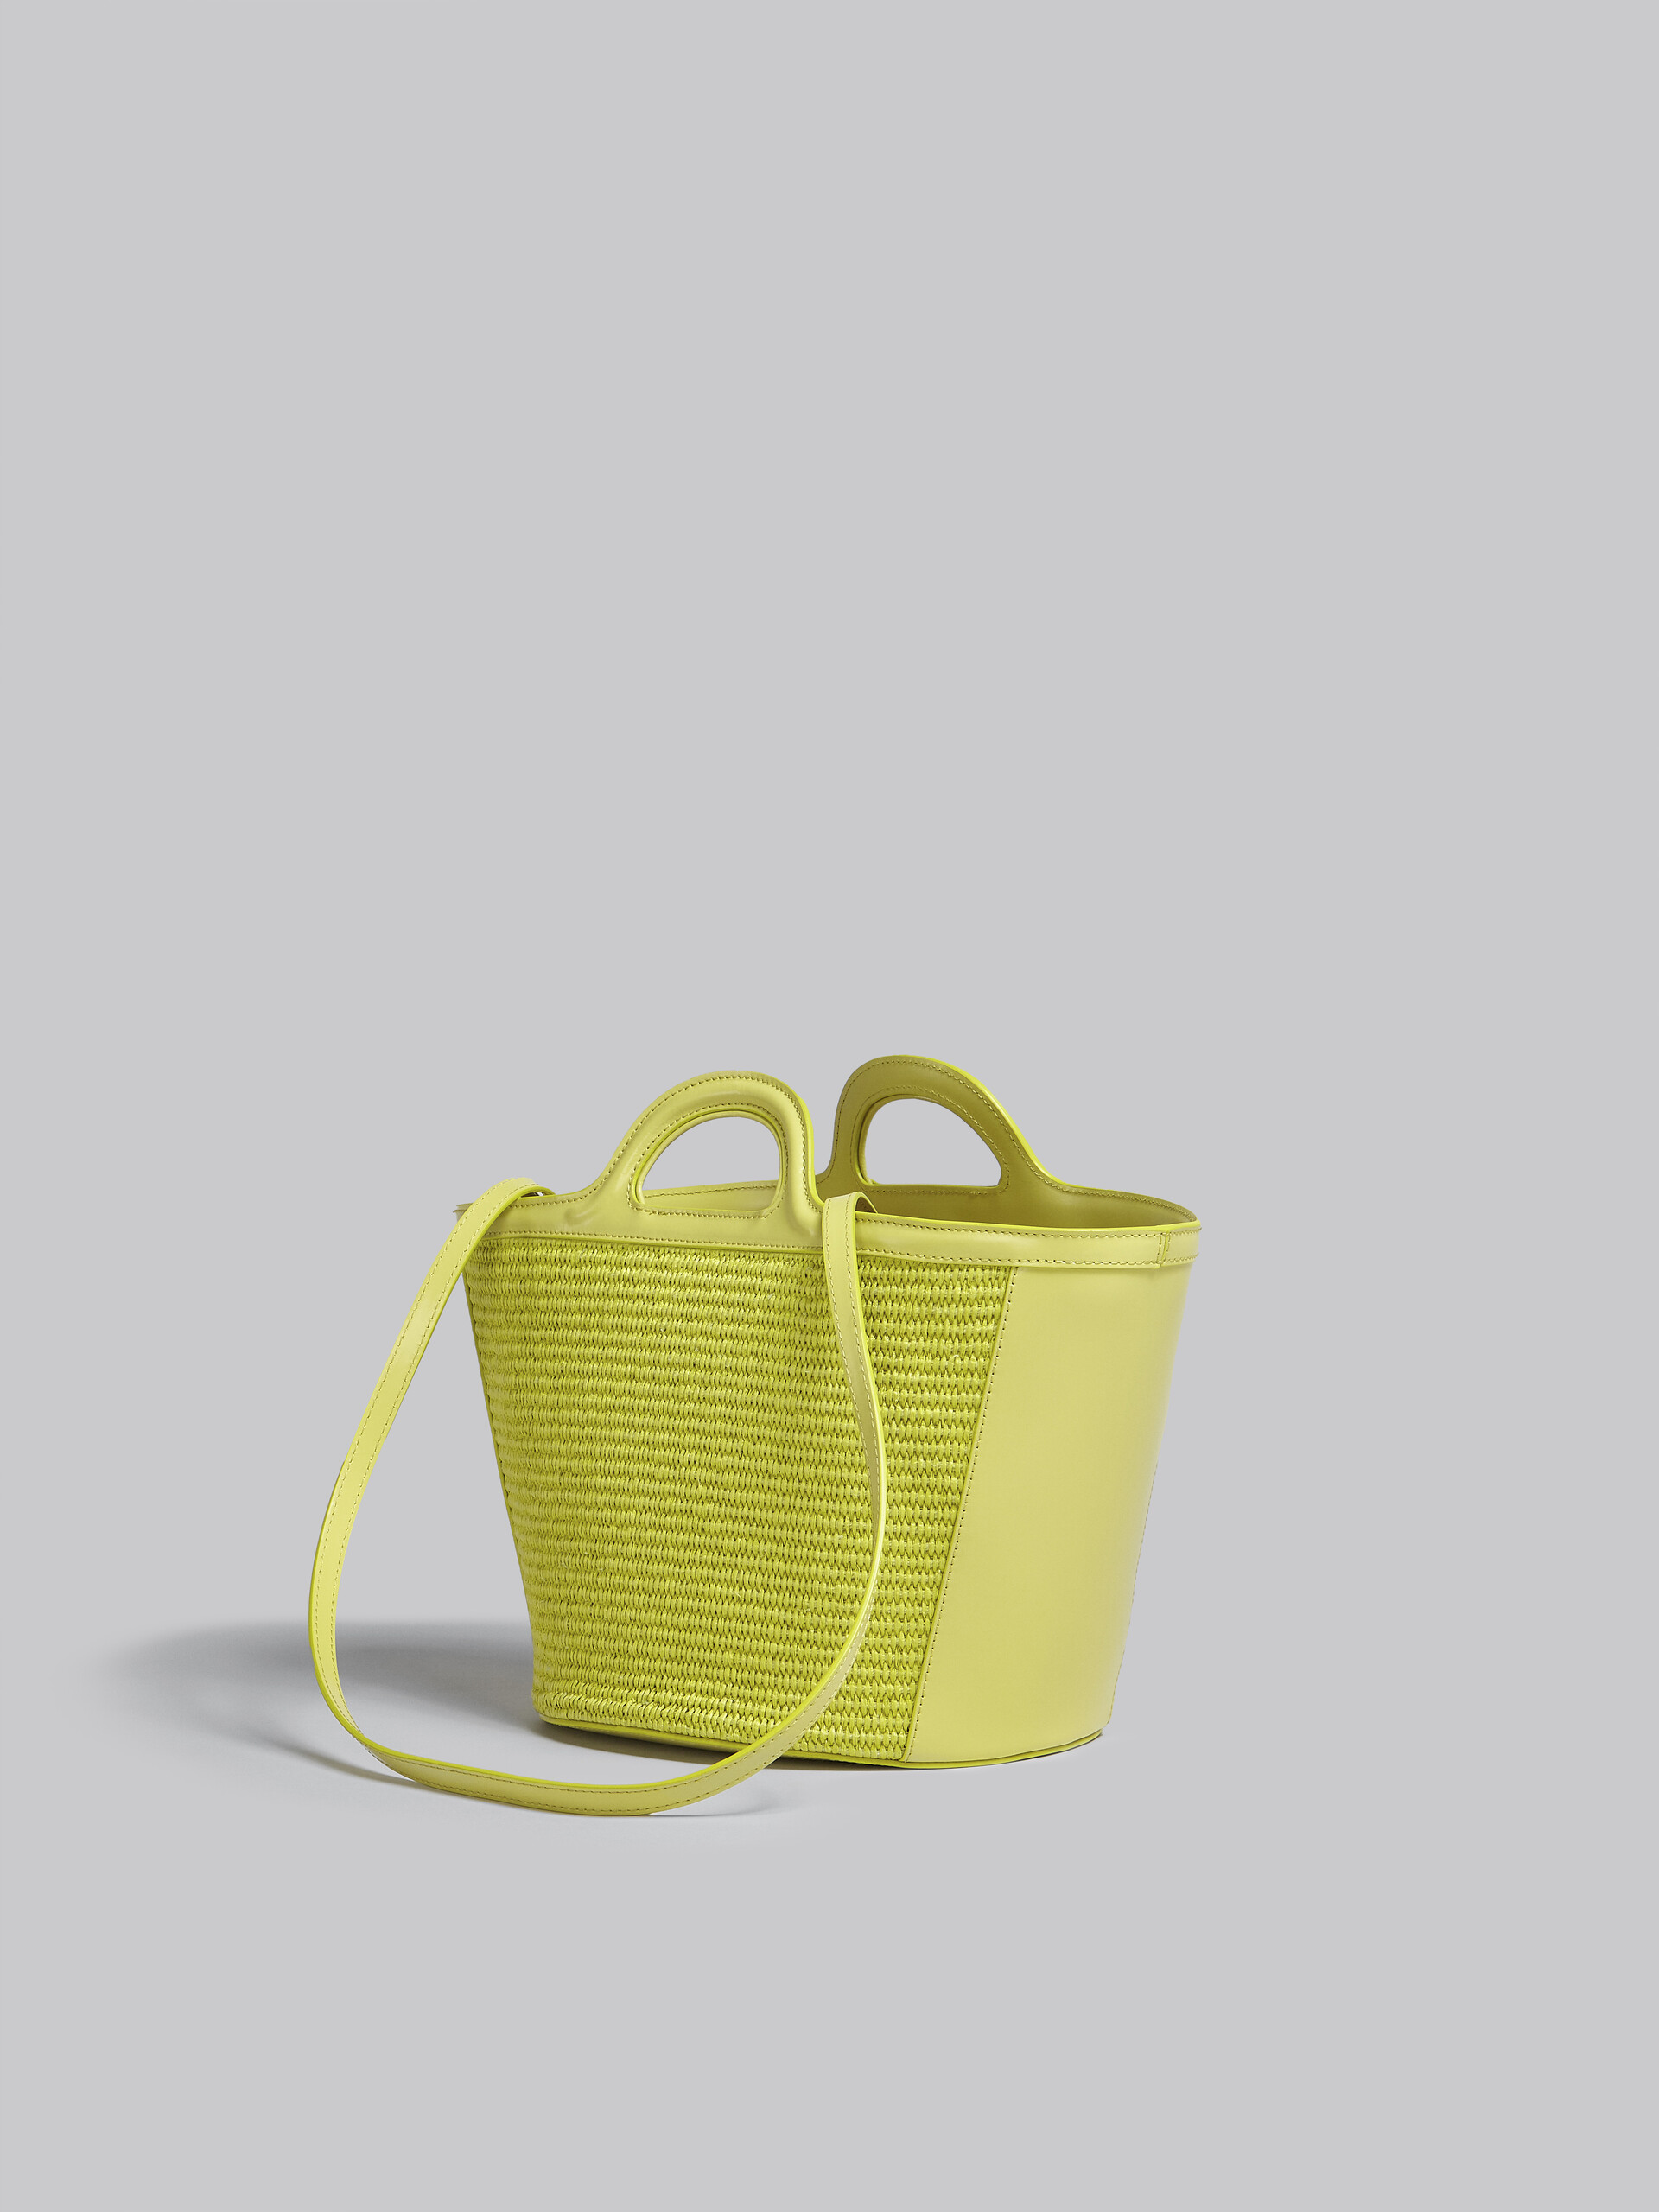 TROPICALIA small bag in yellow leather and raffia - Handbag - Image 2